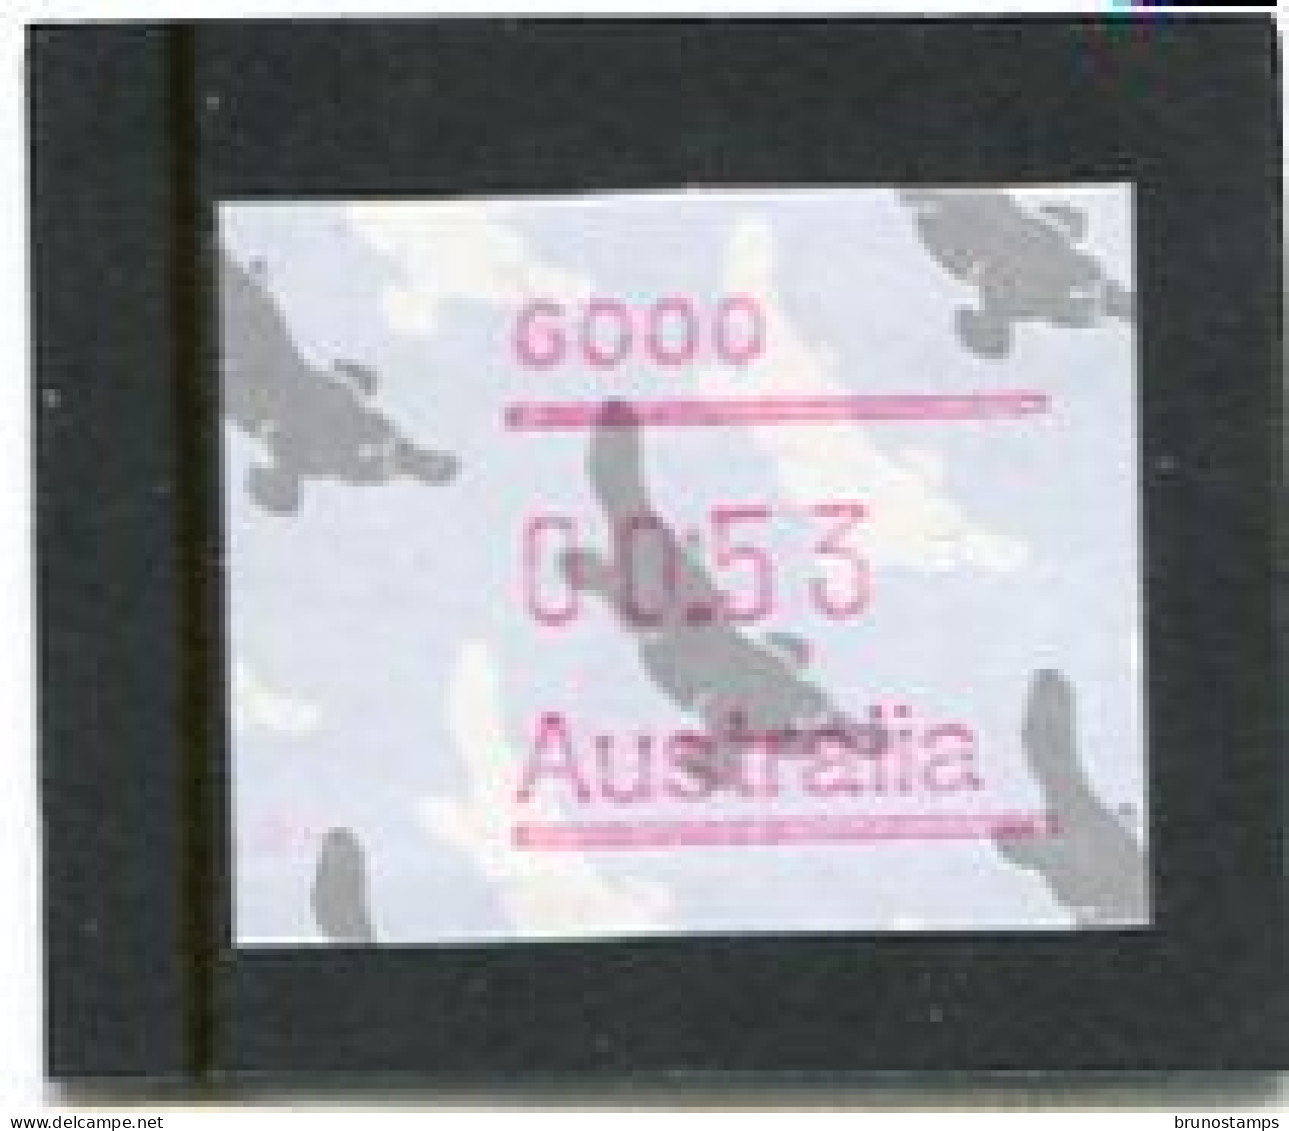 AUSTRALIA - 1987  53c  FRAMA  PLATYPUS  POSTCODE  6000 (PERTH)  MINT NH - Machine Labels [ATM]